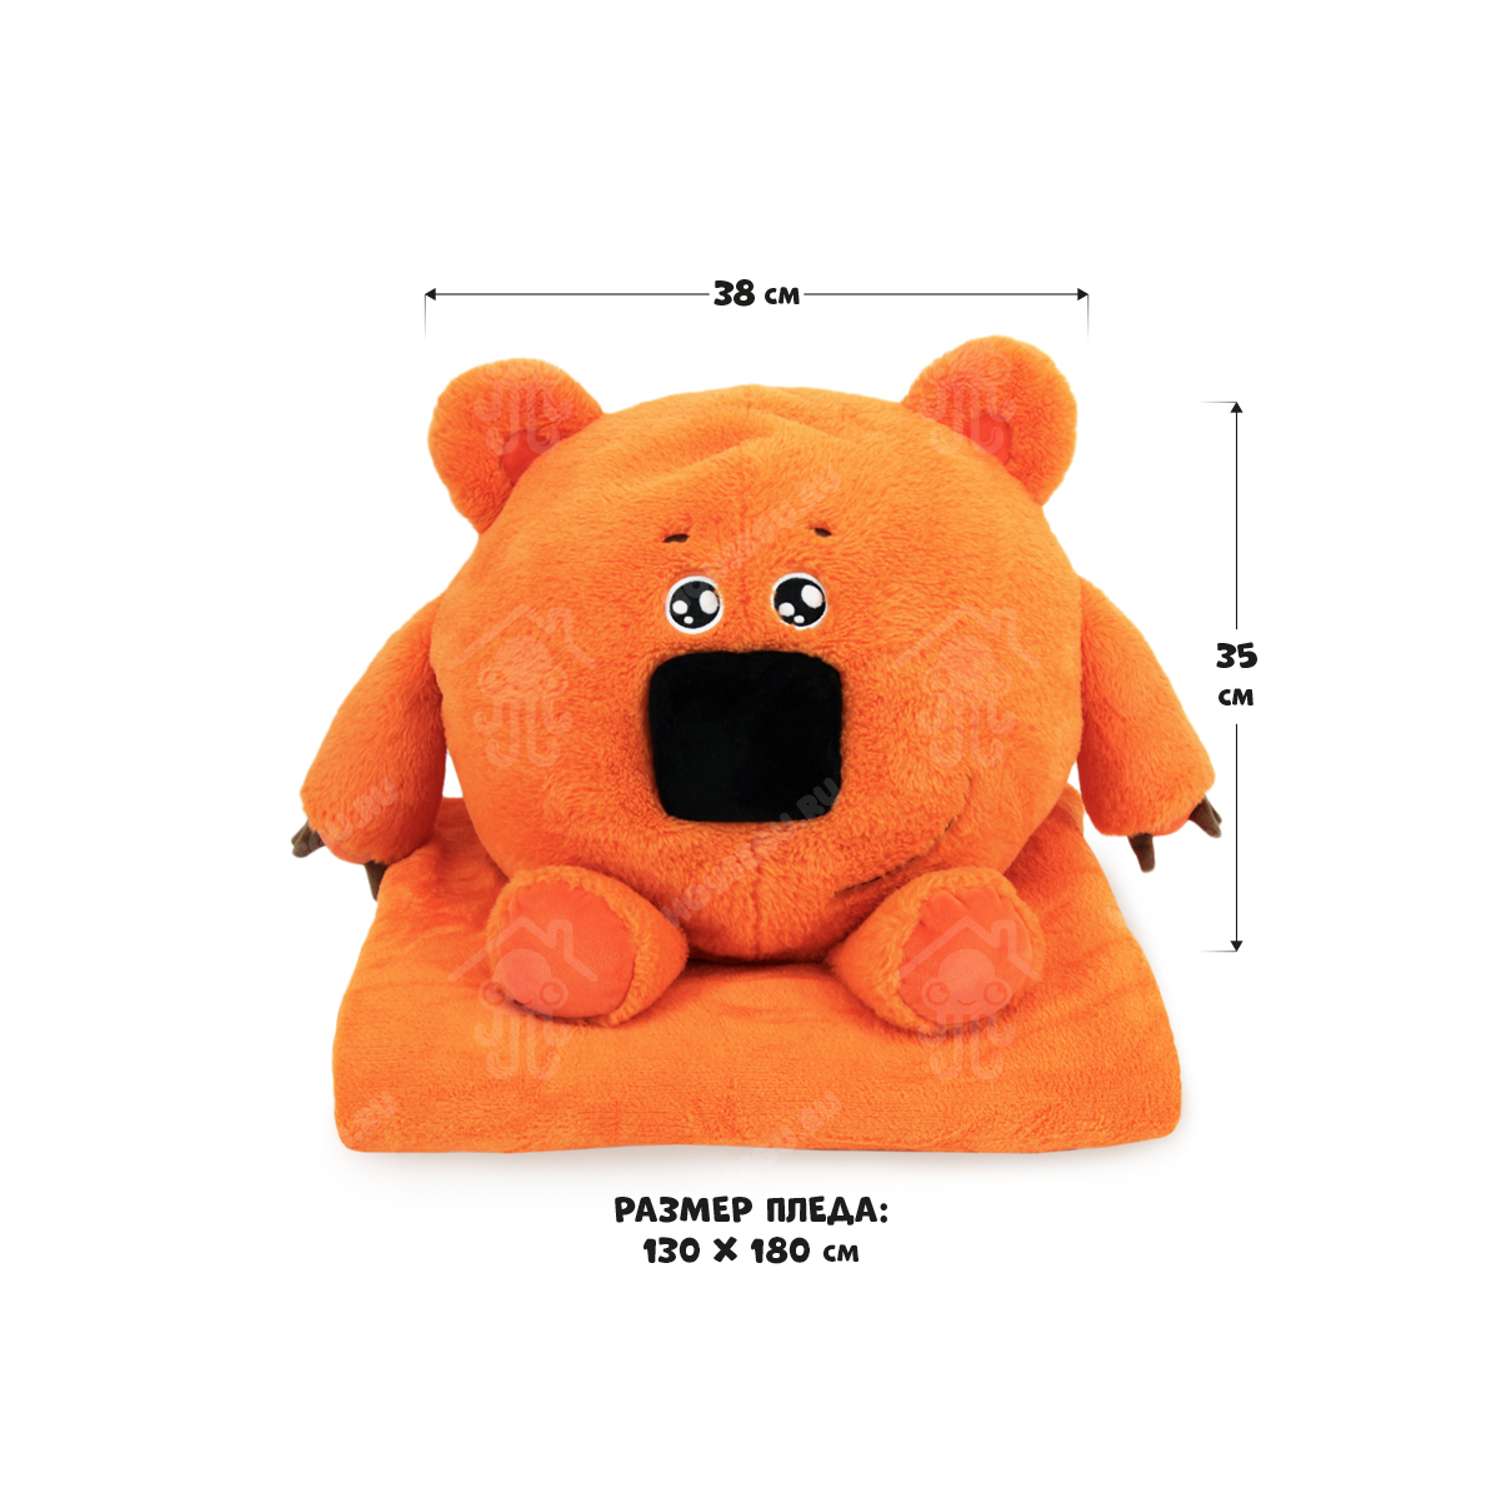 Мимимишки подушка игрушка плед HOUSEGURU оранжевый - фото 5